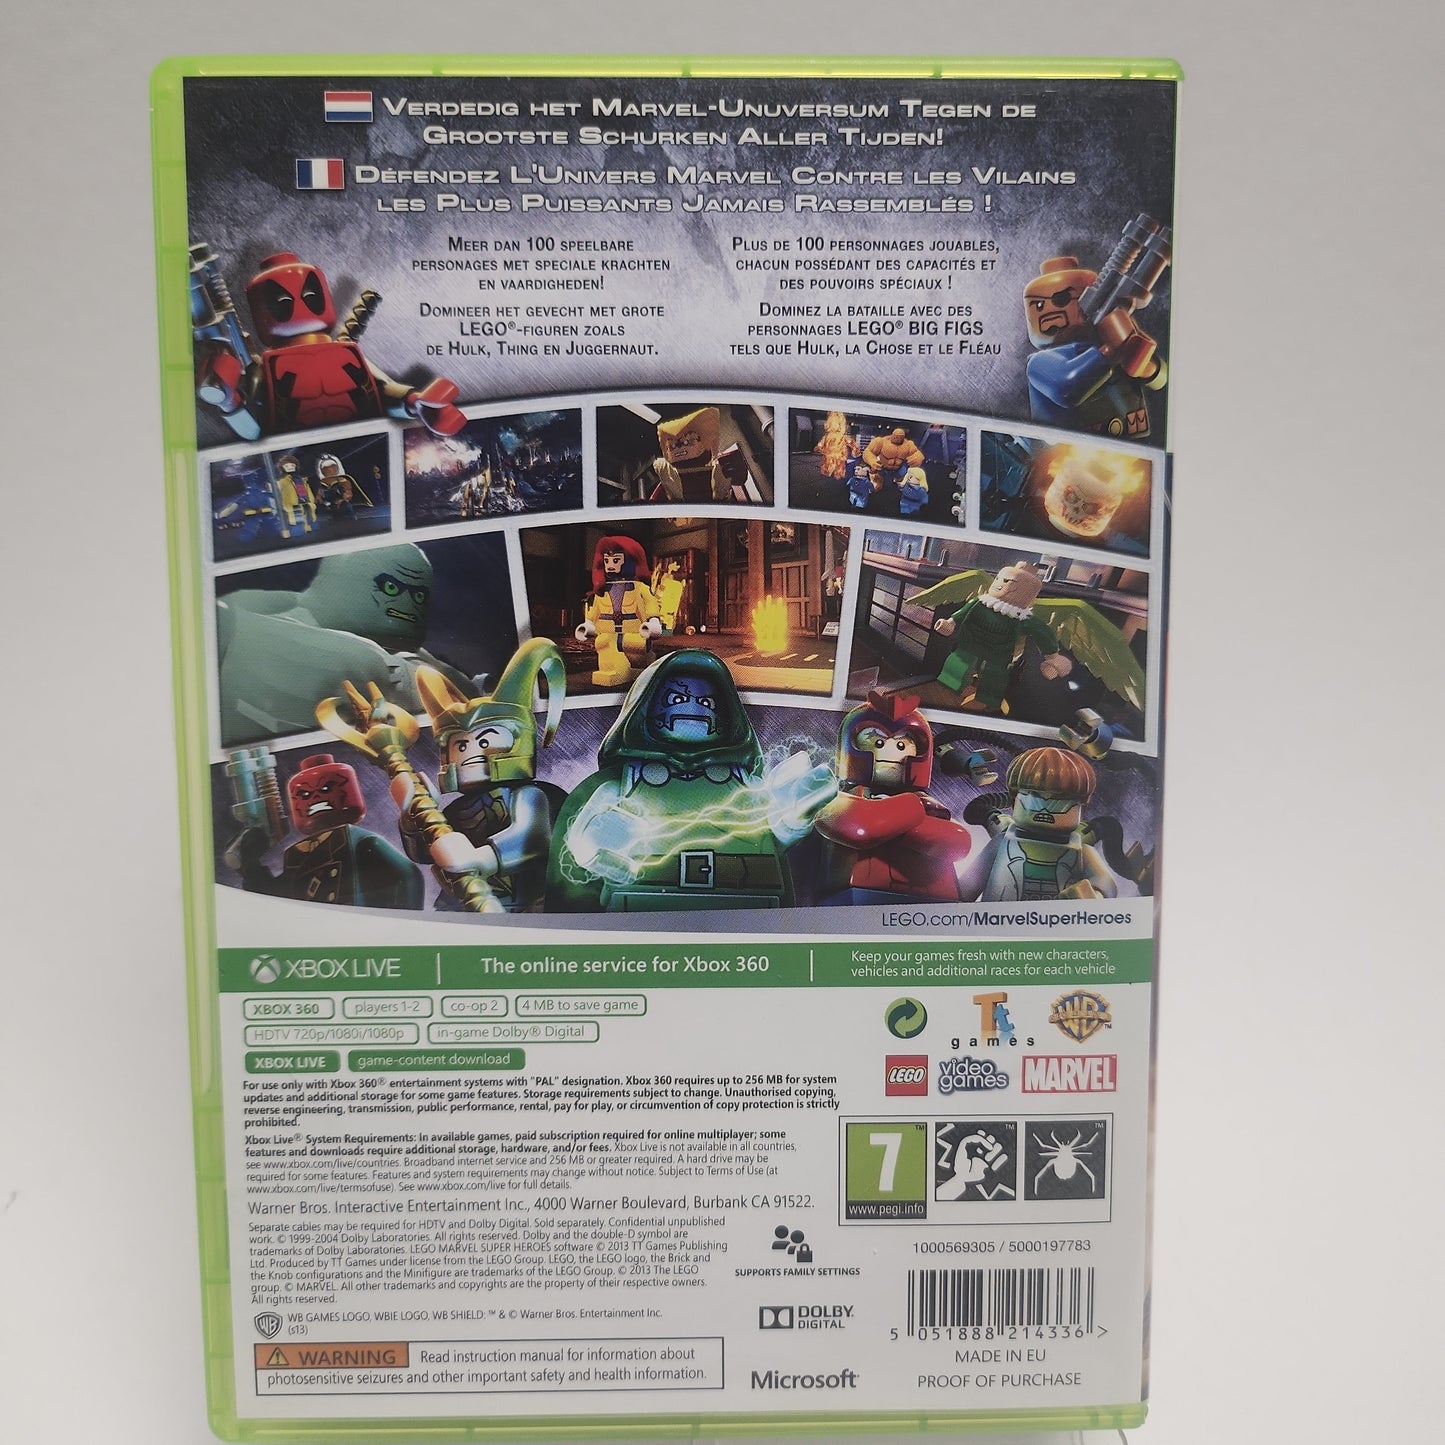 LEGO Marvel Super Heroes Xbox 360